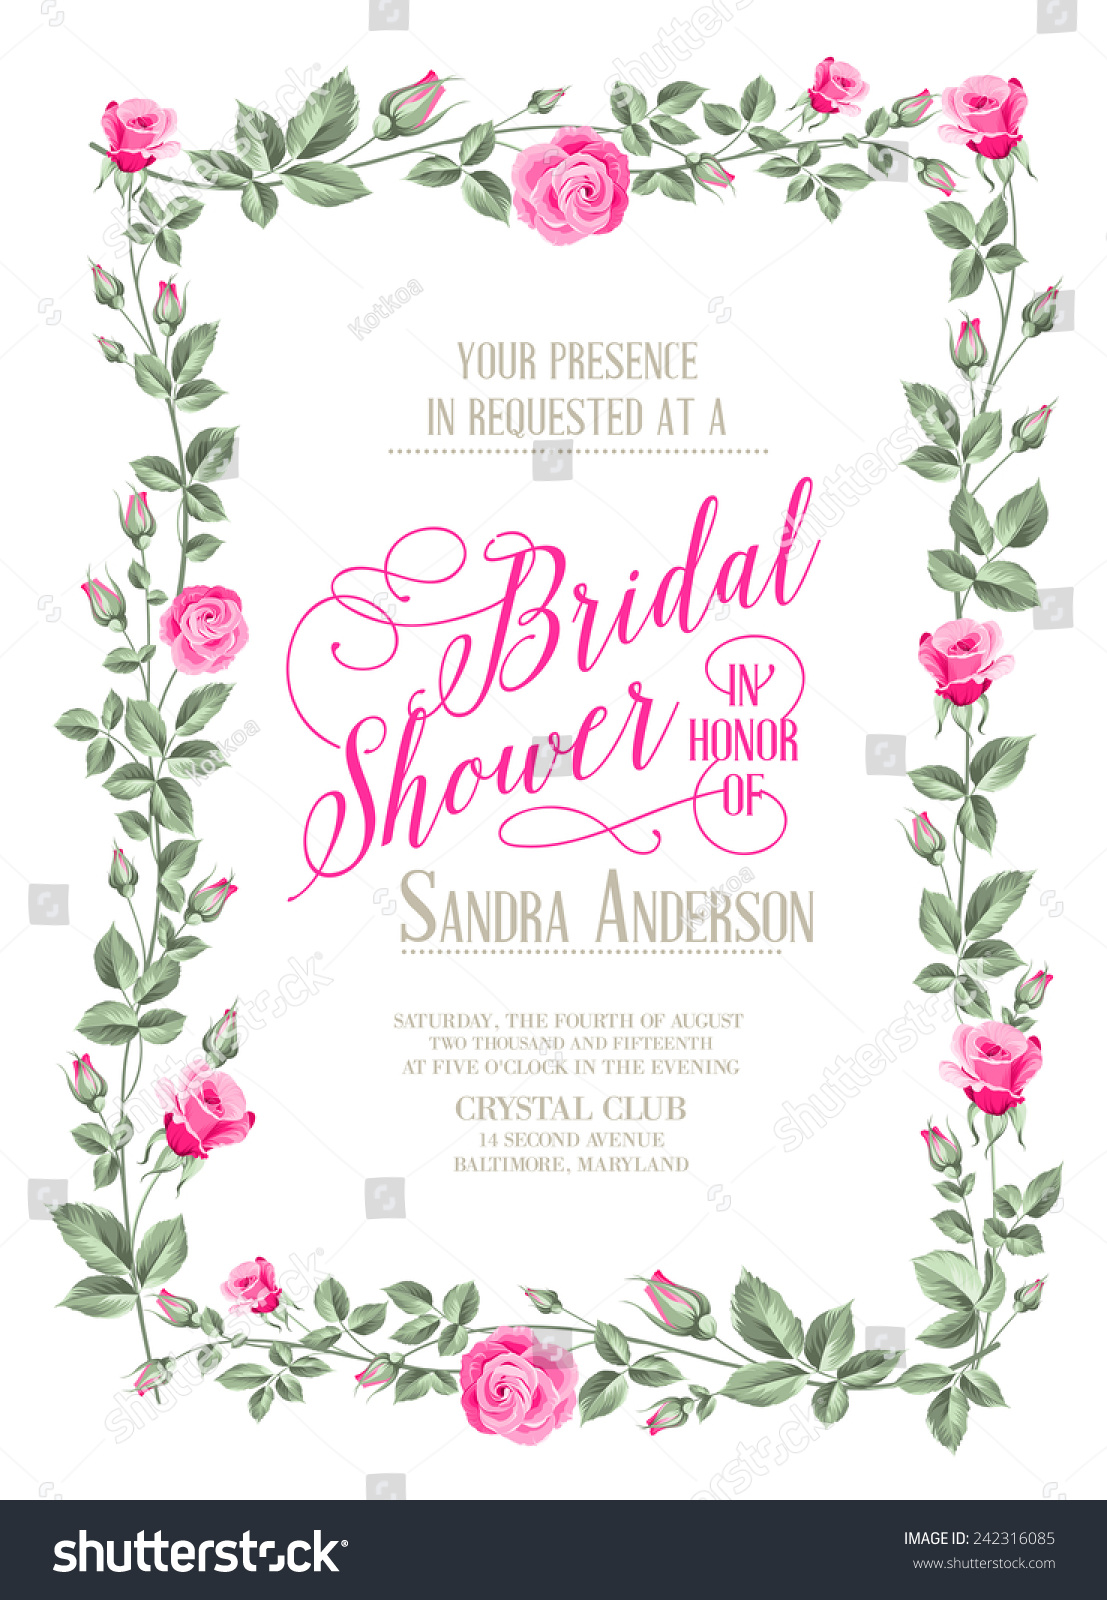 Bridal Shower Invitation Flowers Over White Stock Vector (Royalty Free ...